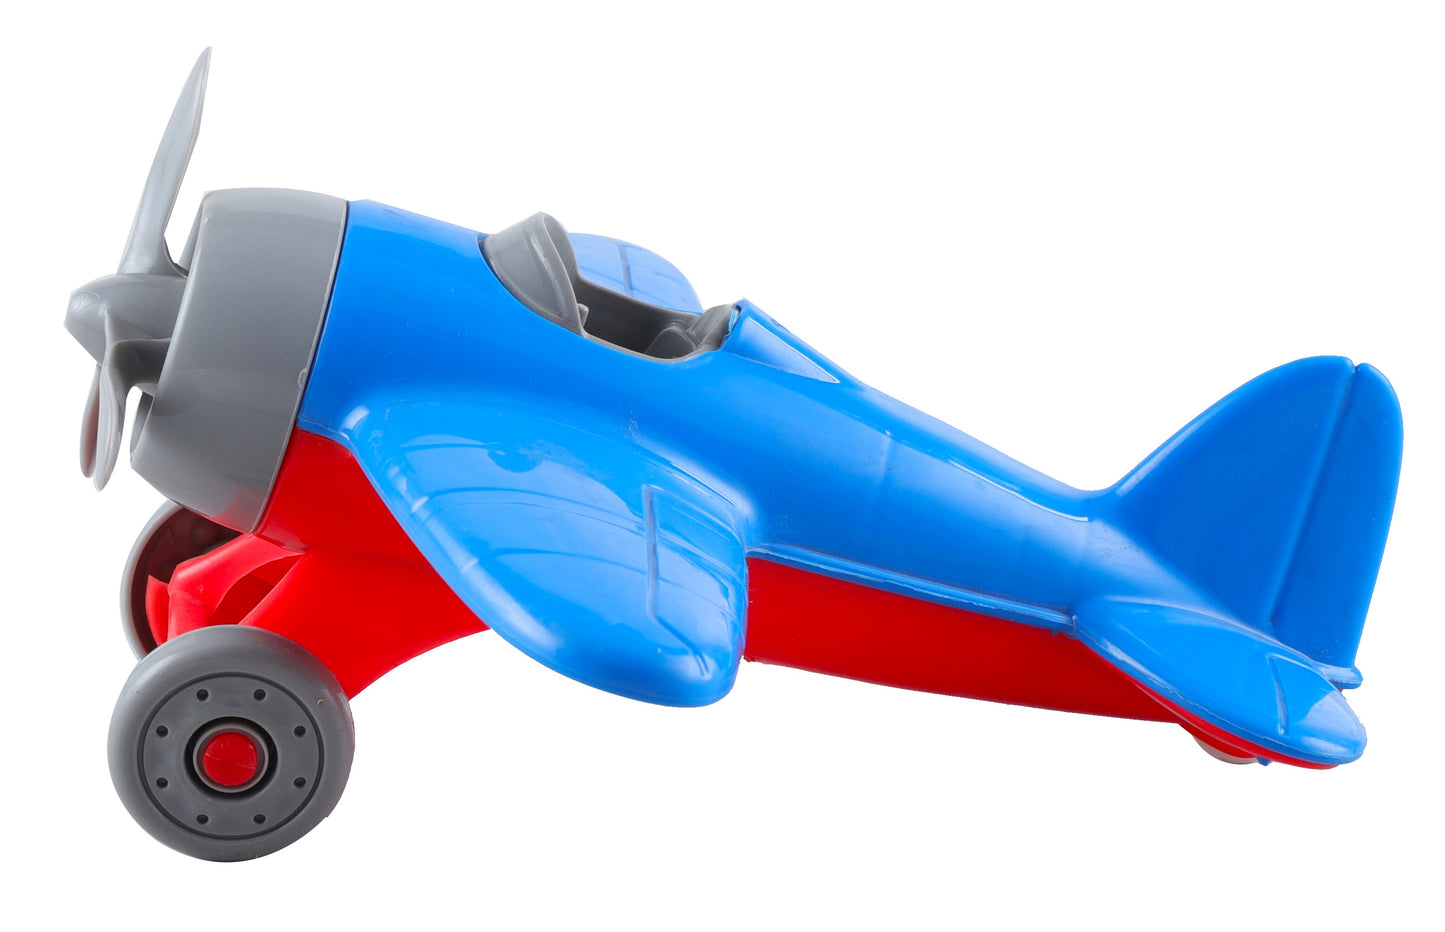 Goyal's Bingo Airplane Toys - BPA Free, Aero Plane for Improving Aeronautical Knowledge of Children - No Metal Axle, No Nut Used, No Sharp Edges, Safe Toy for Kids - Blue